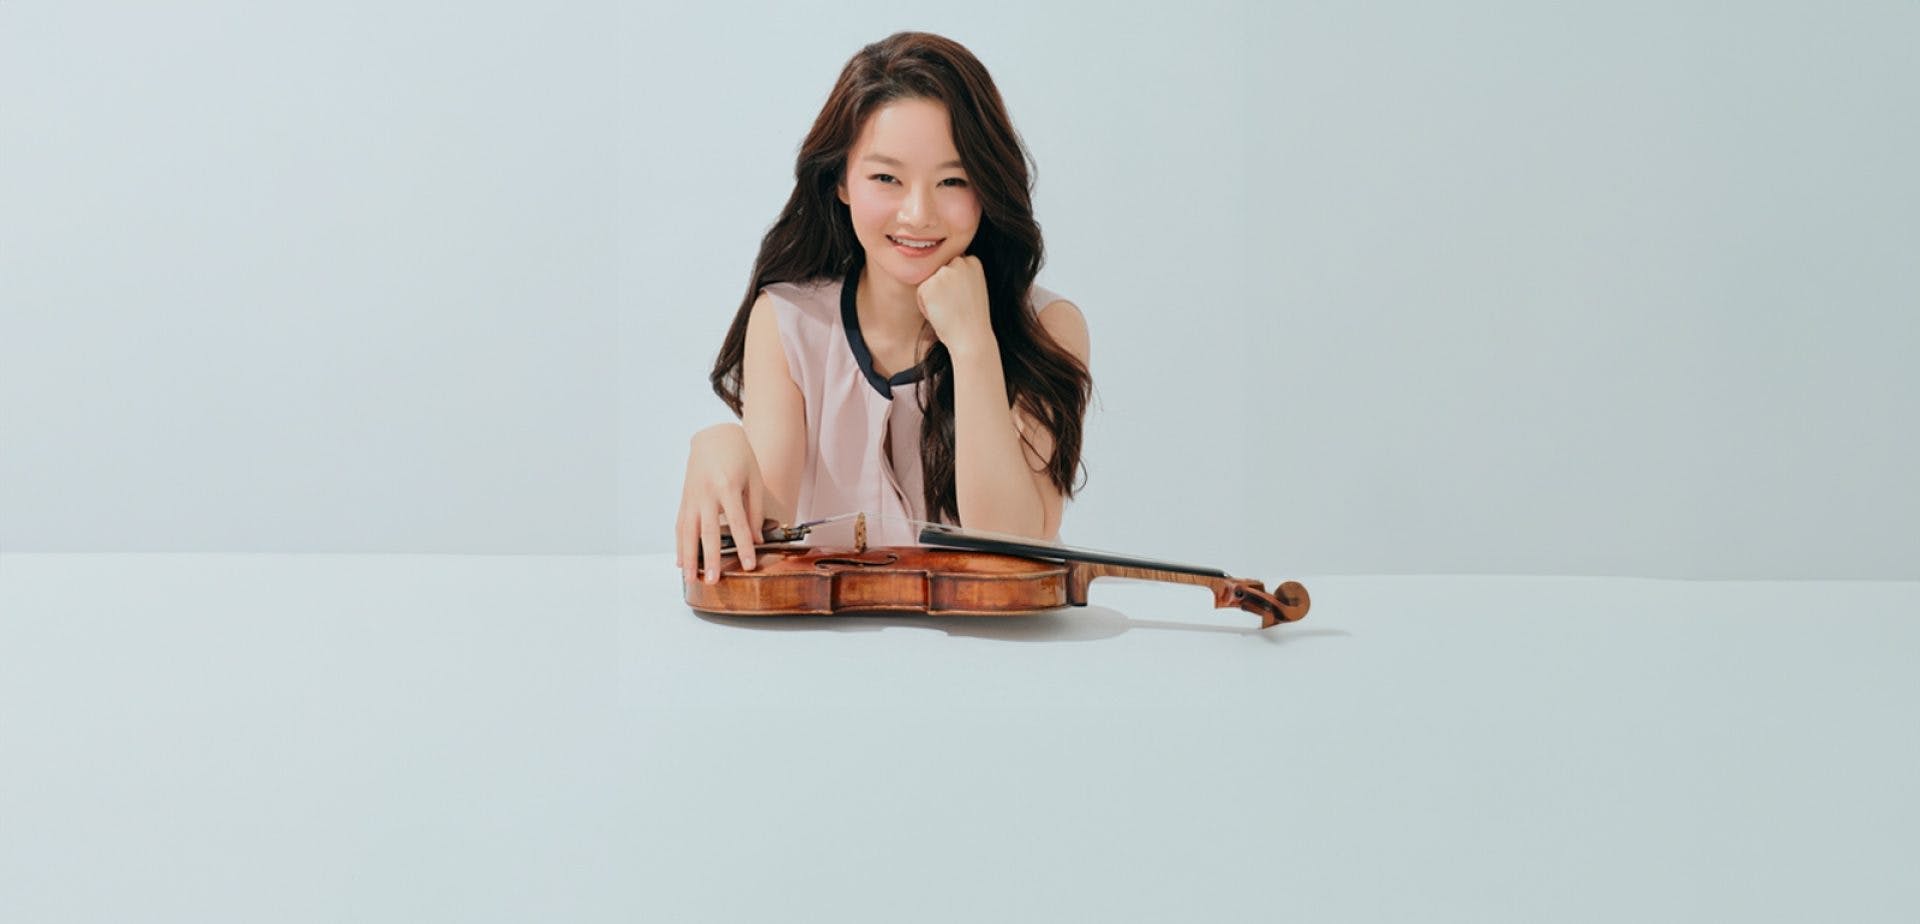 Bomsori Kim plays Tchaikovsky's Violin Concerto